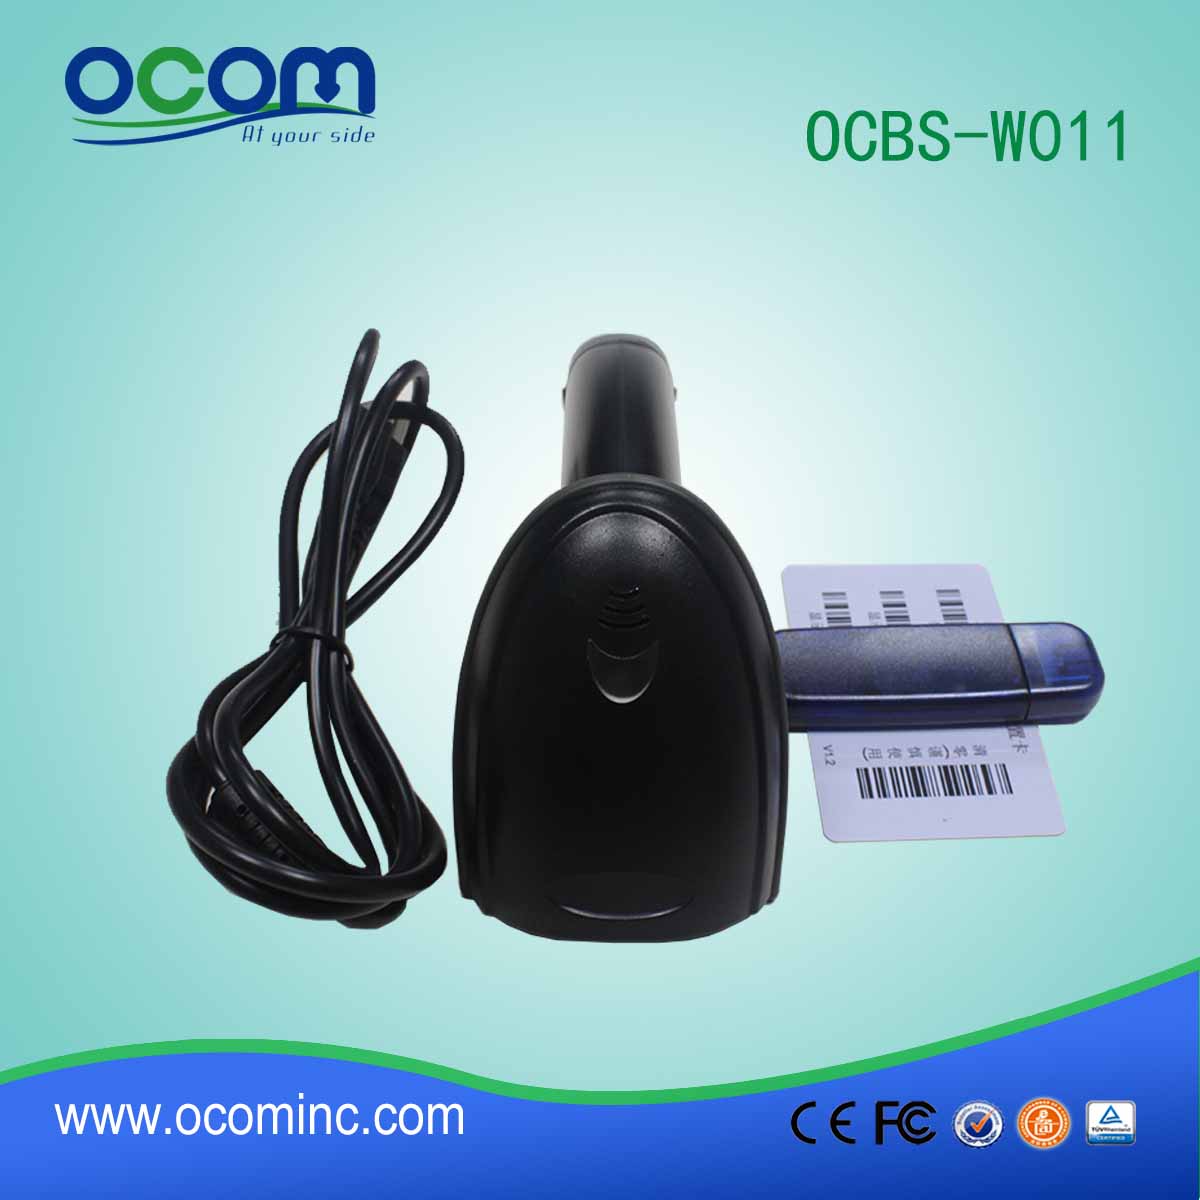 OCBS-W011 بلوتوث اللاسلكية الباركود الماسح الضوئي مع منفذ USB